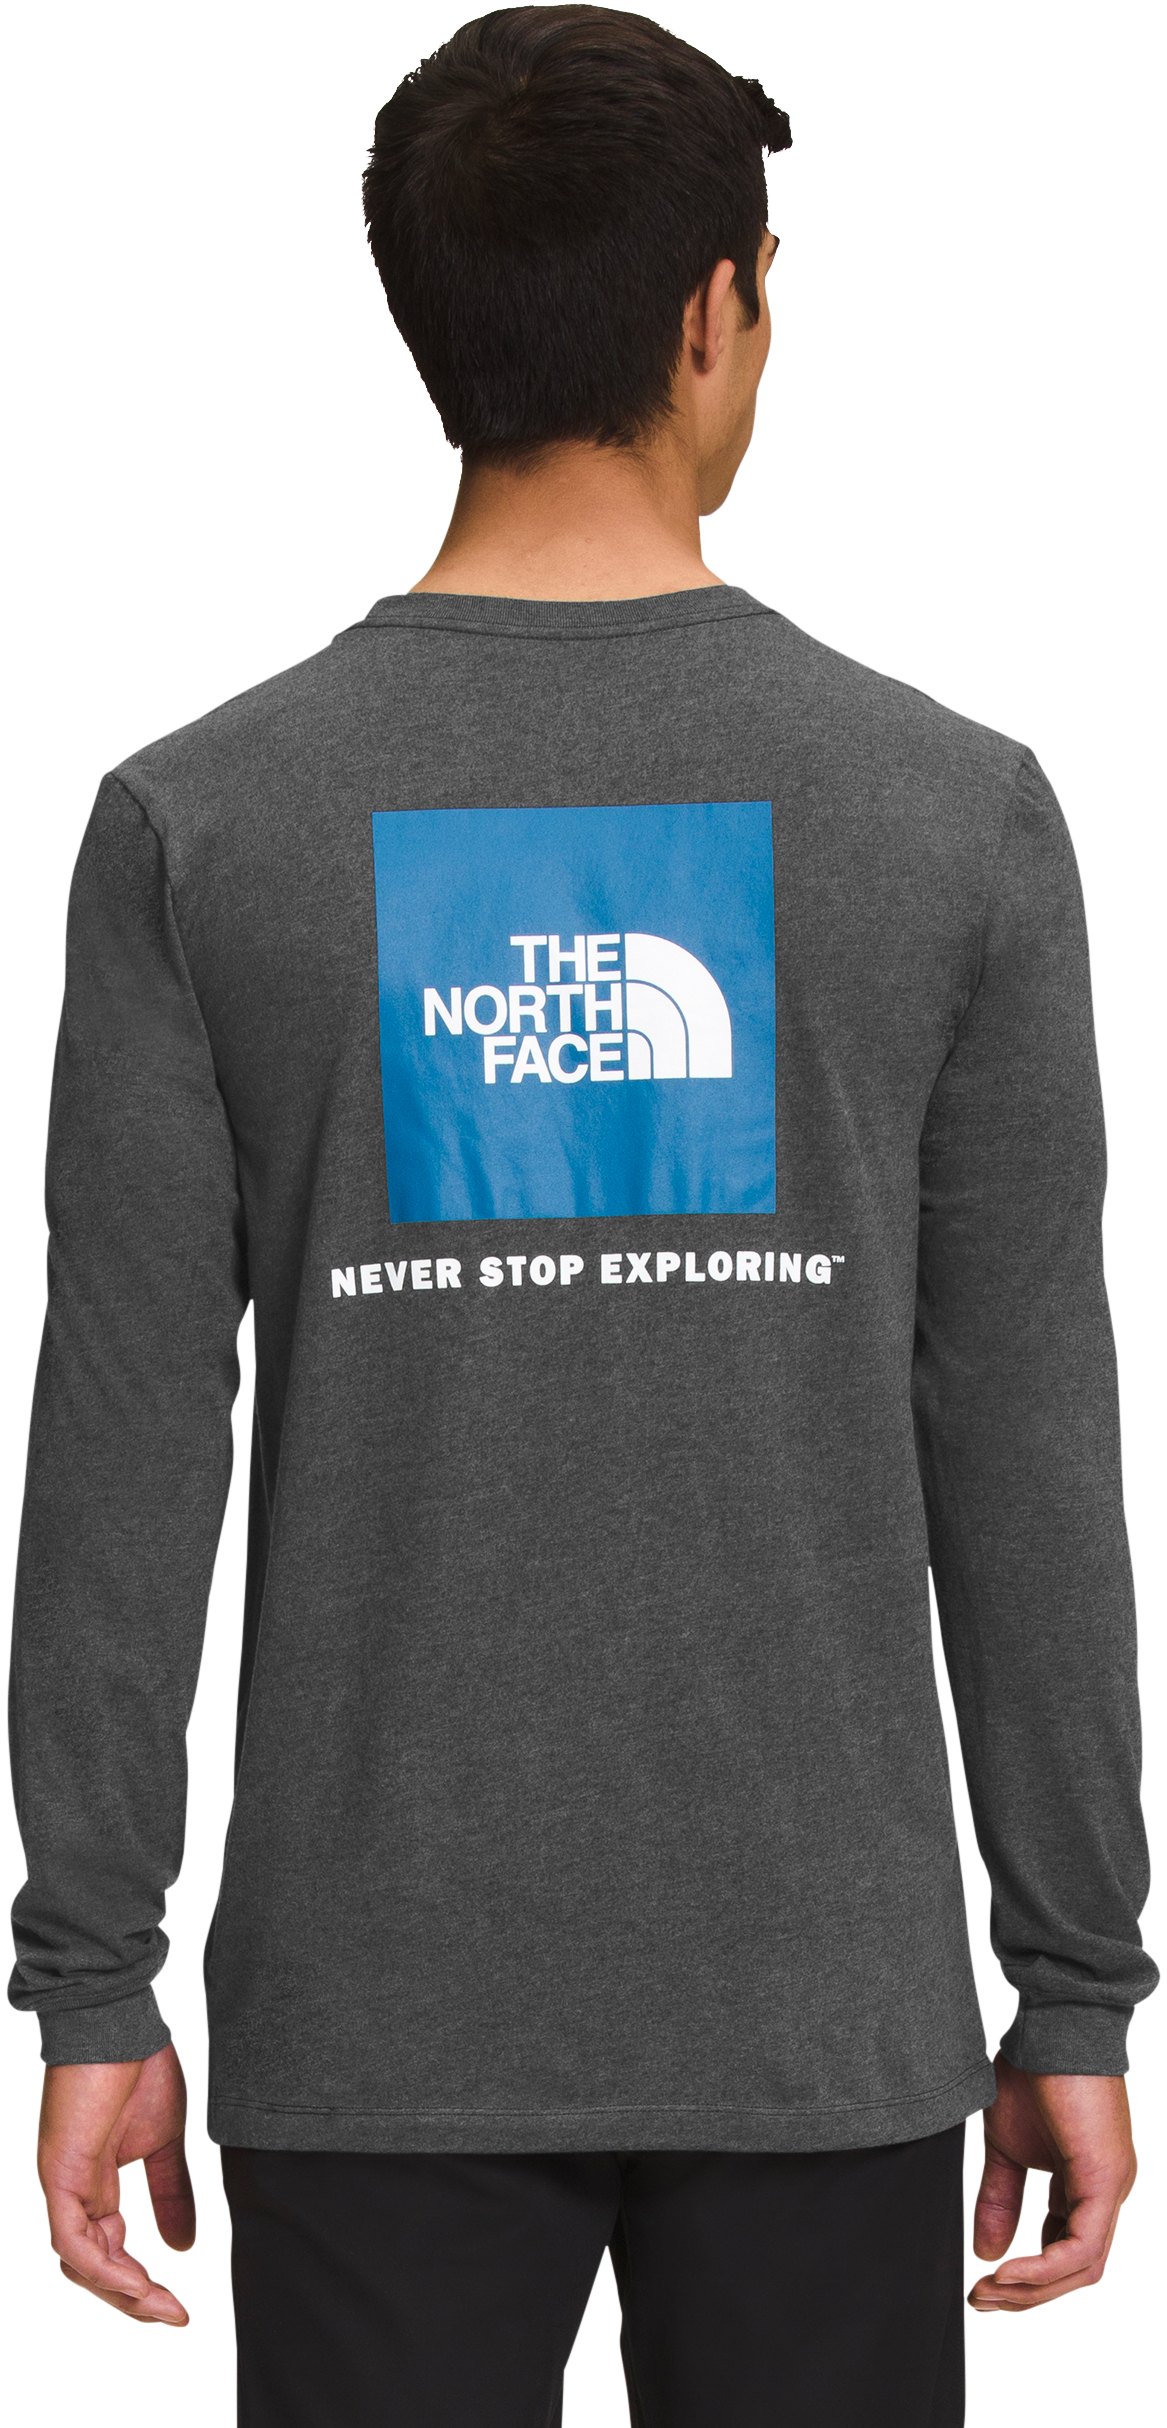 The North Face Box NSE Long-Sleeve Shirt for Men - TNF Dark Grey Heather/Banff Blue - 2XL